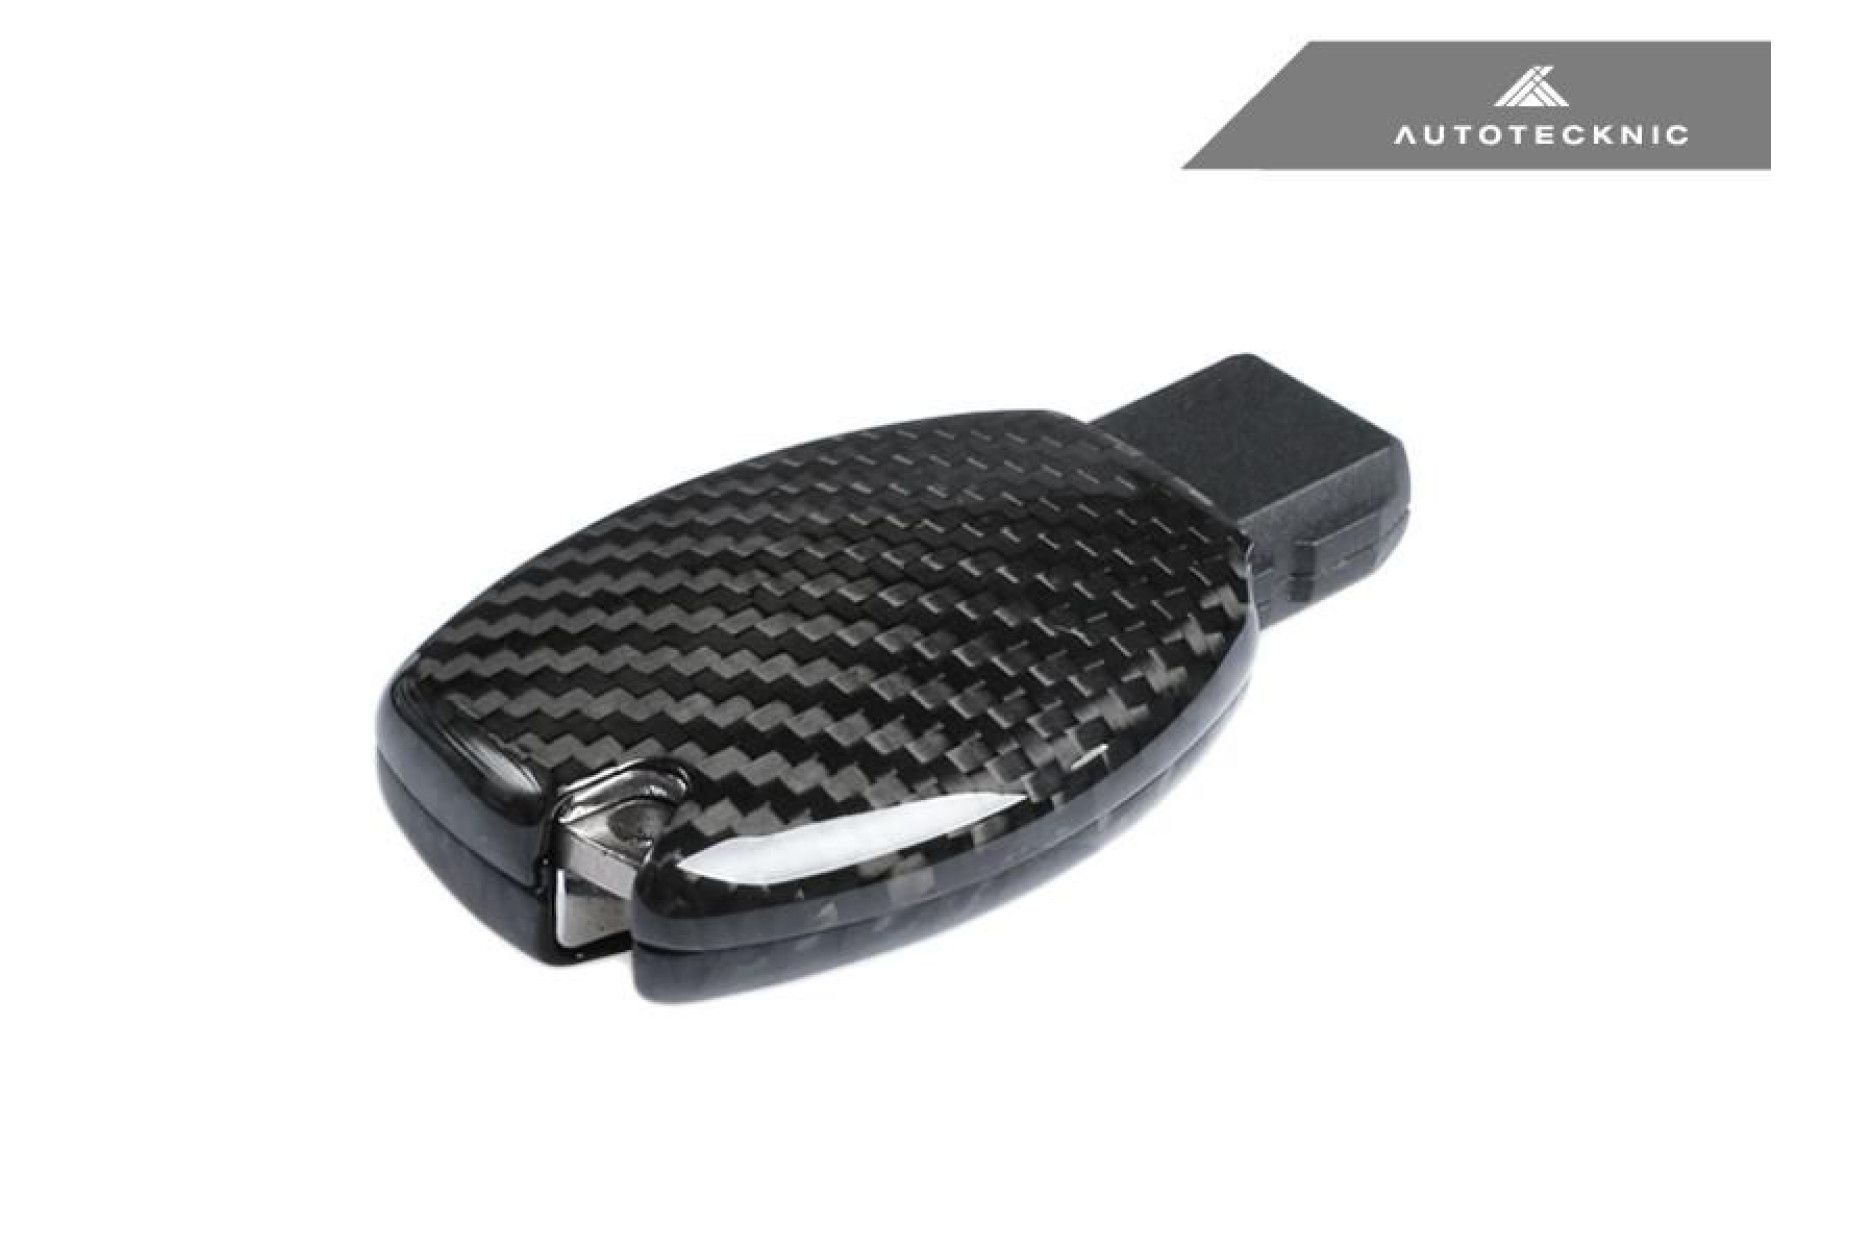 AutoTecknic Dry Carbon Schlüssel Cover für Audi Fahrzeuge 2009-2016